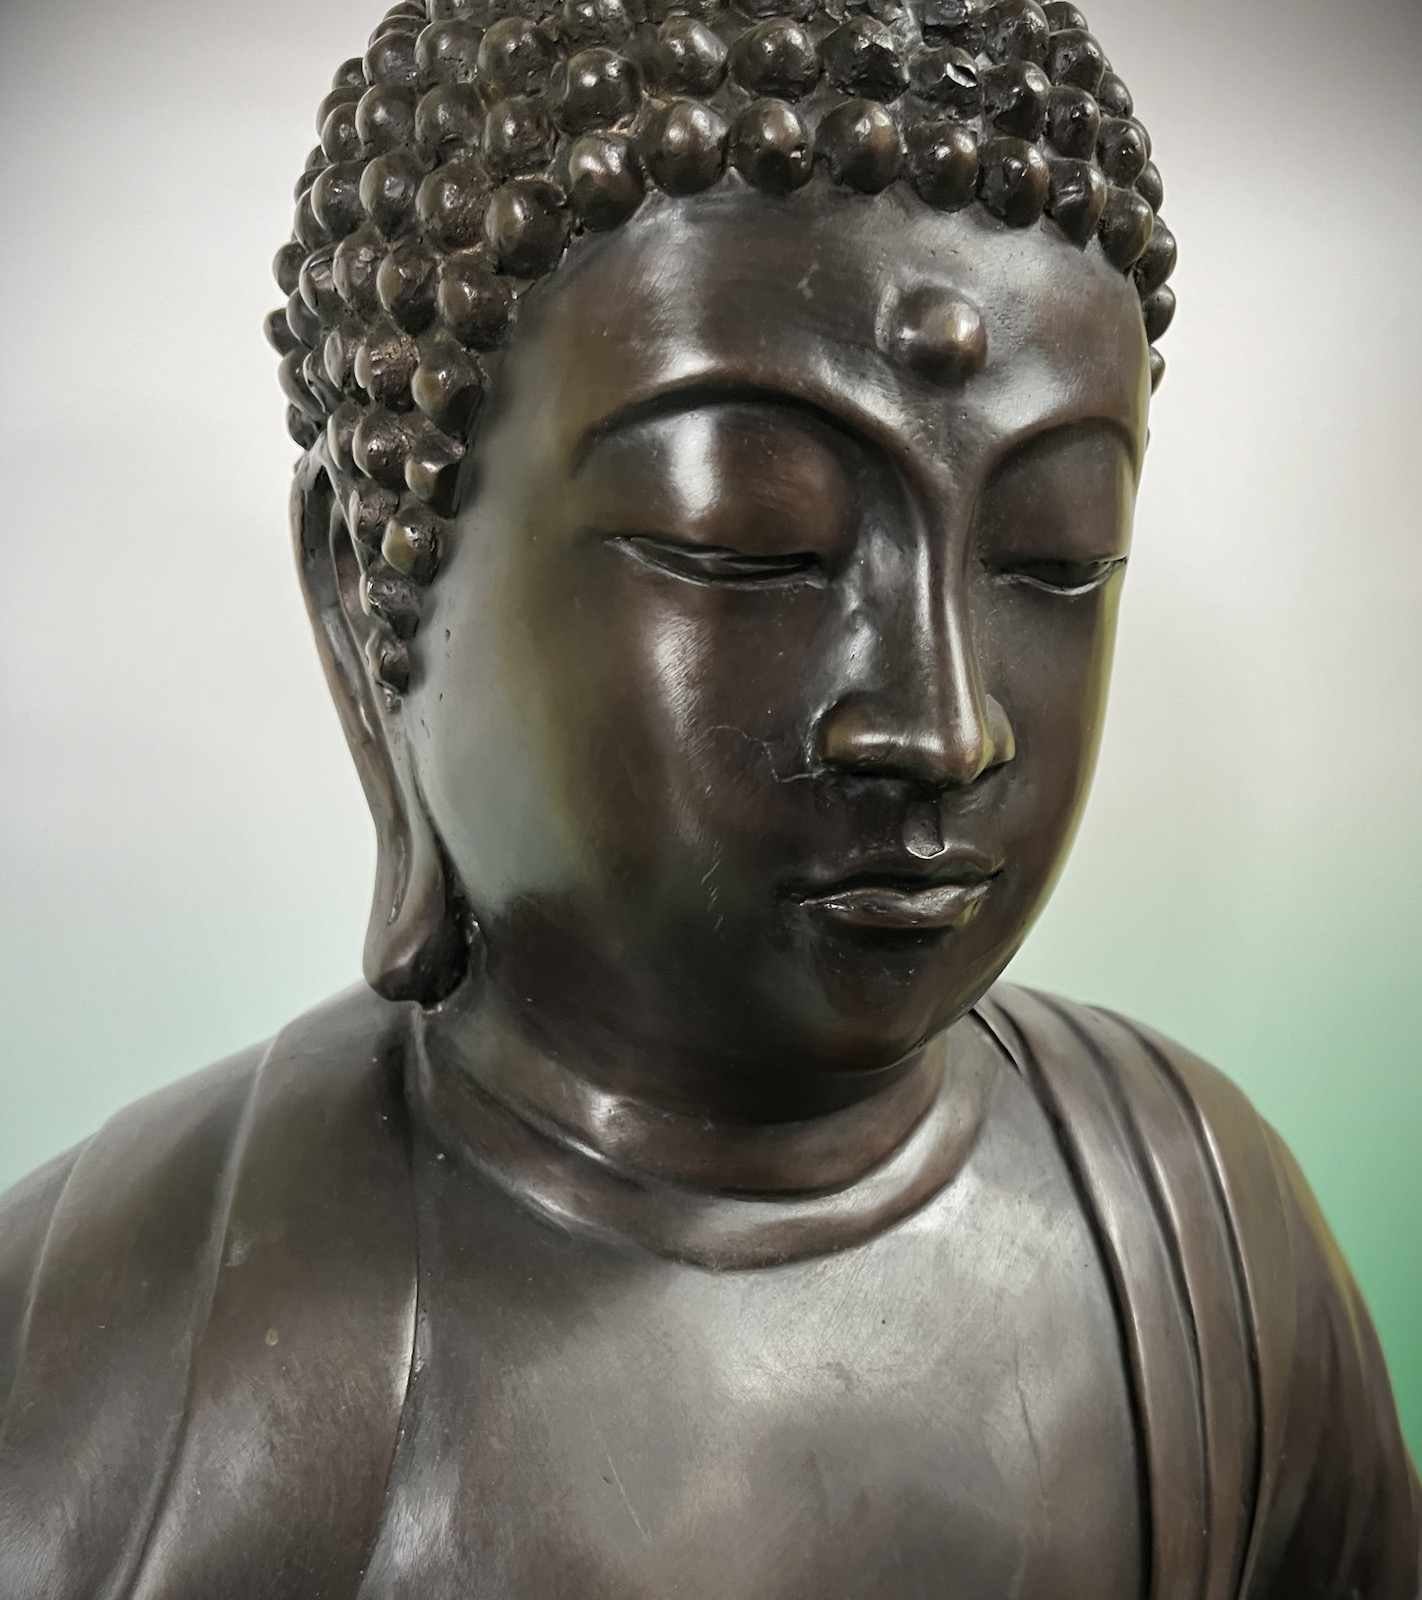 Asien Buddhafigur Statue Buddha (55cm) Bronze Skulptur LifeStyle Kamakura Figur Daibutsu